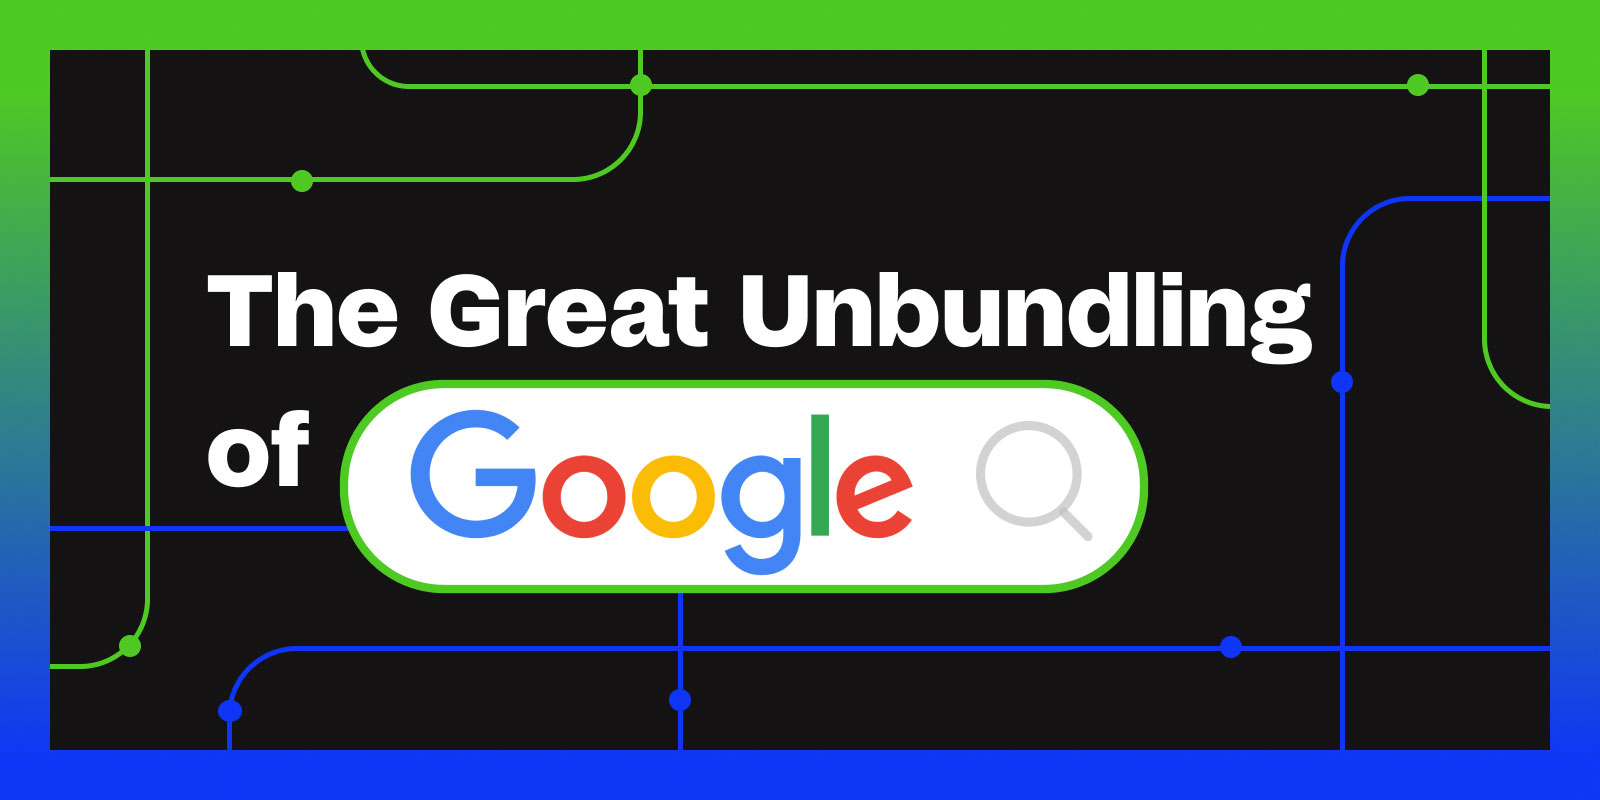 The Great Unbundling of Google